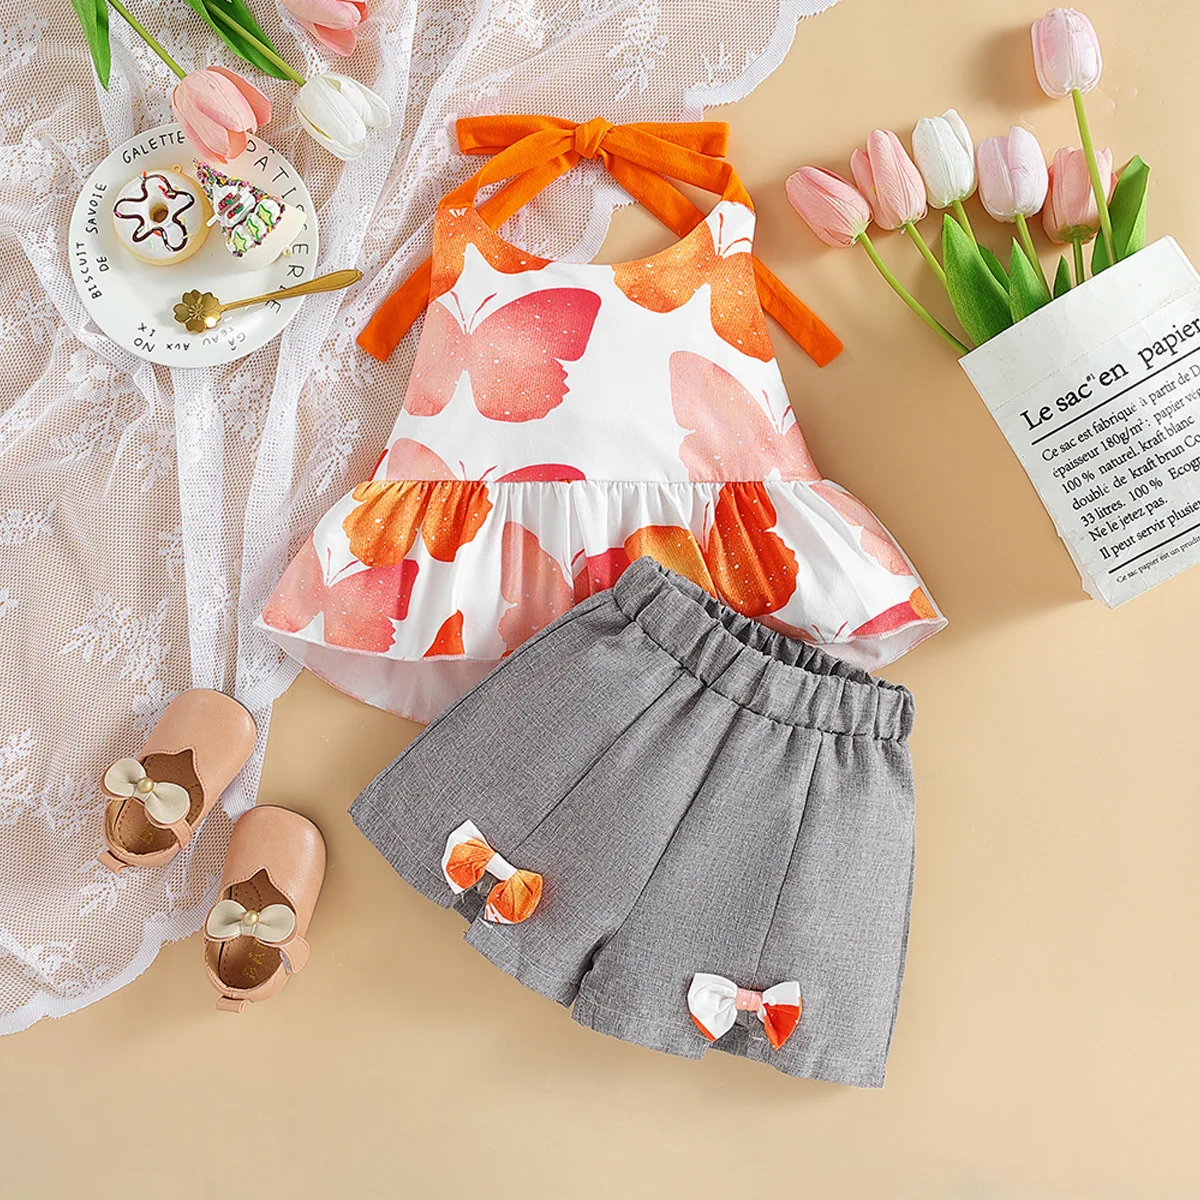 New trendy toddler girls clothing sets summer children's sleeveless shirts+shorts 2pcs clothing kids outfits